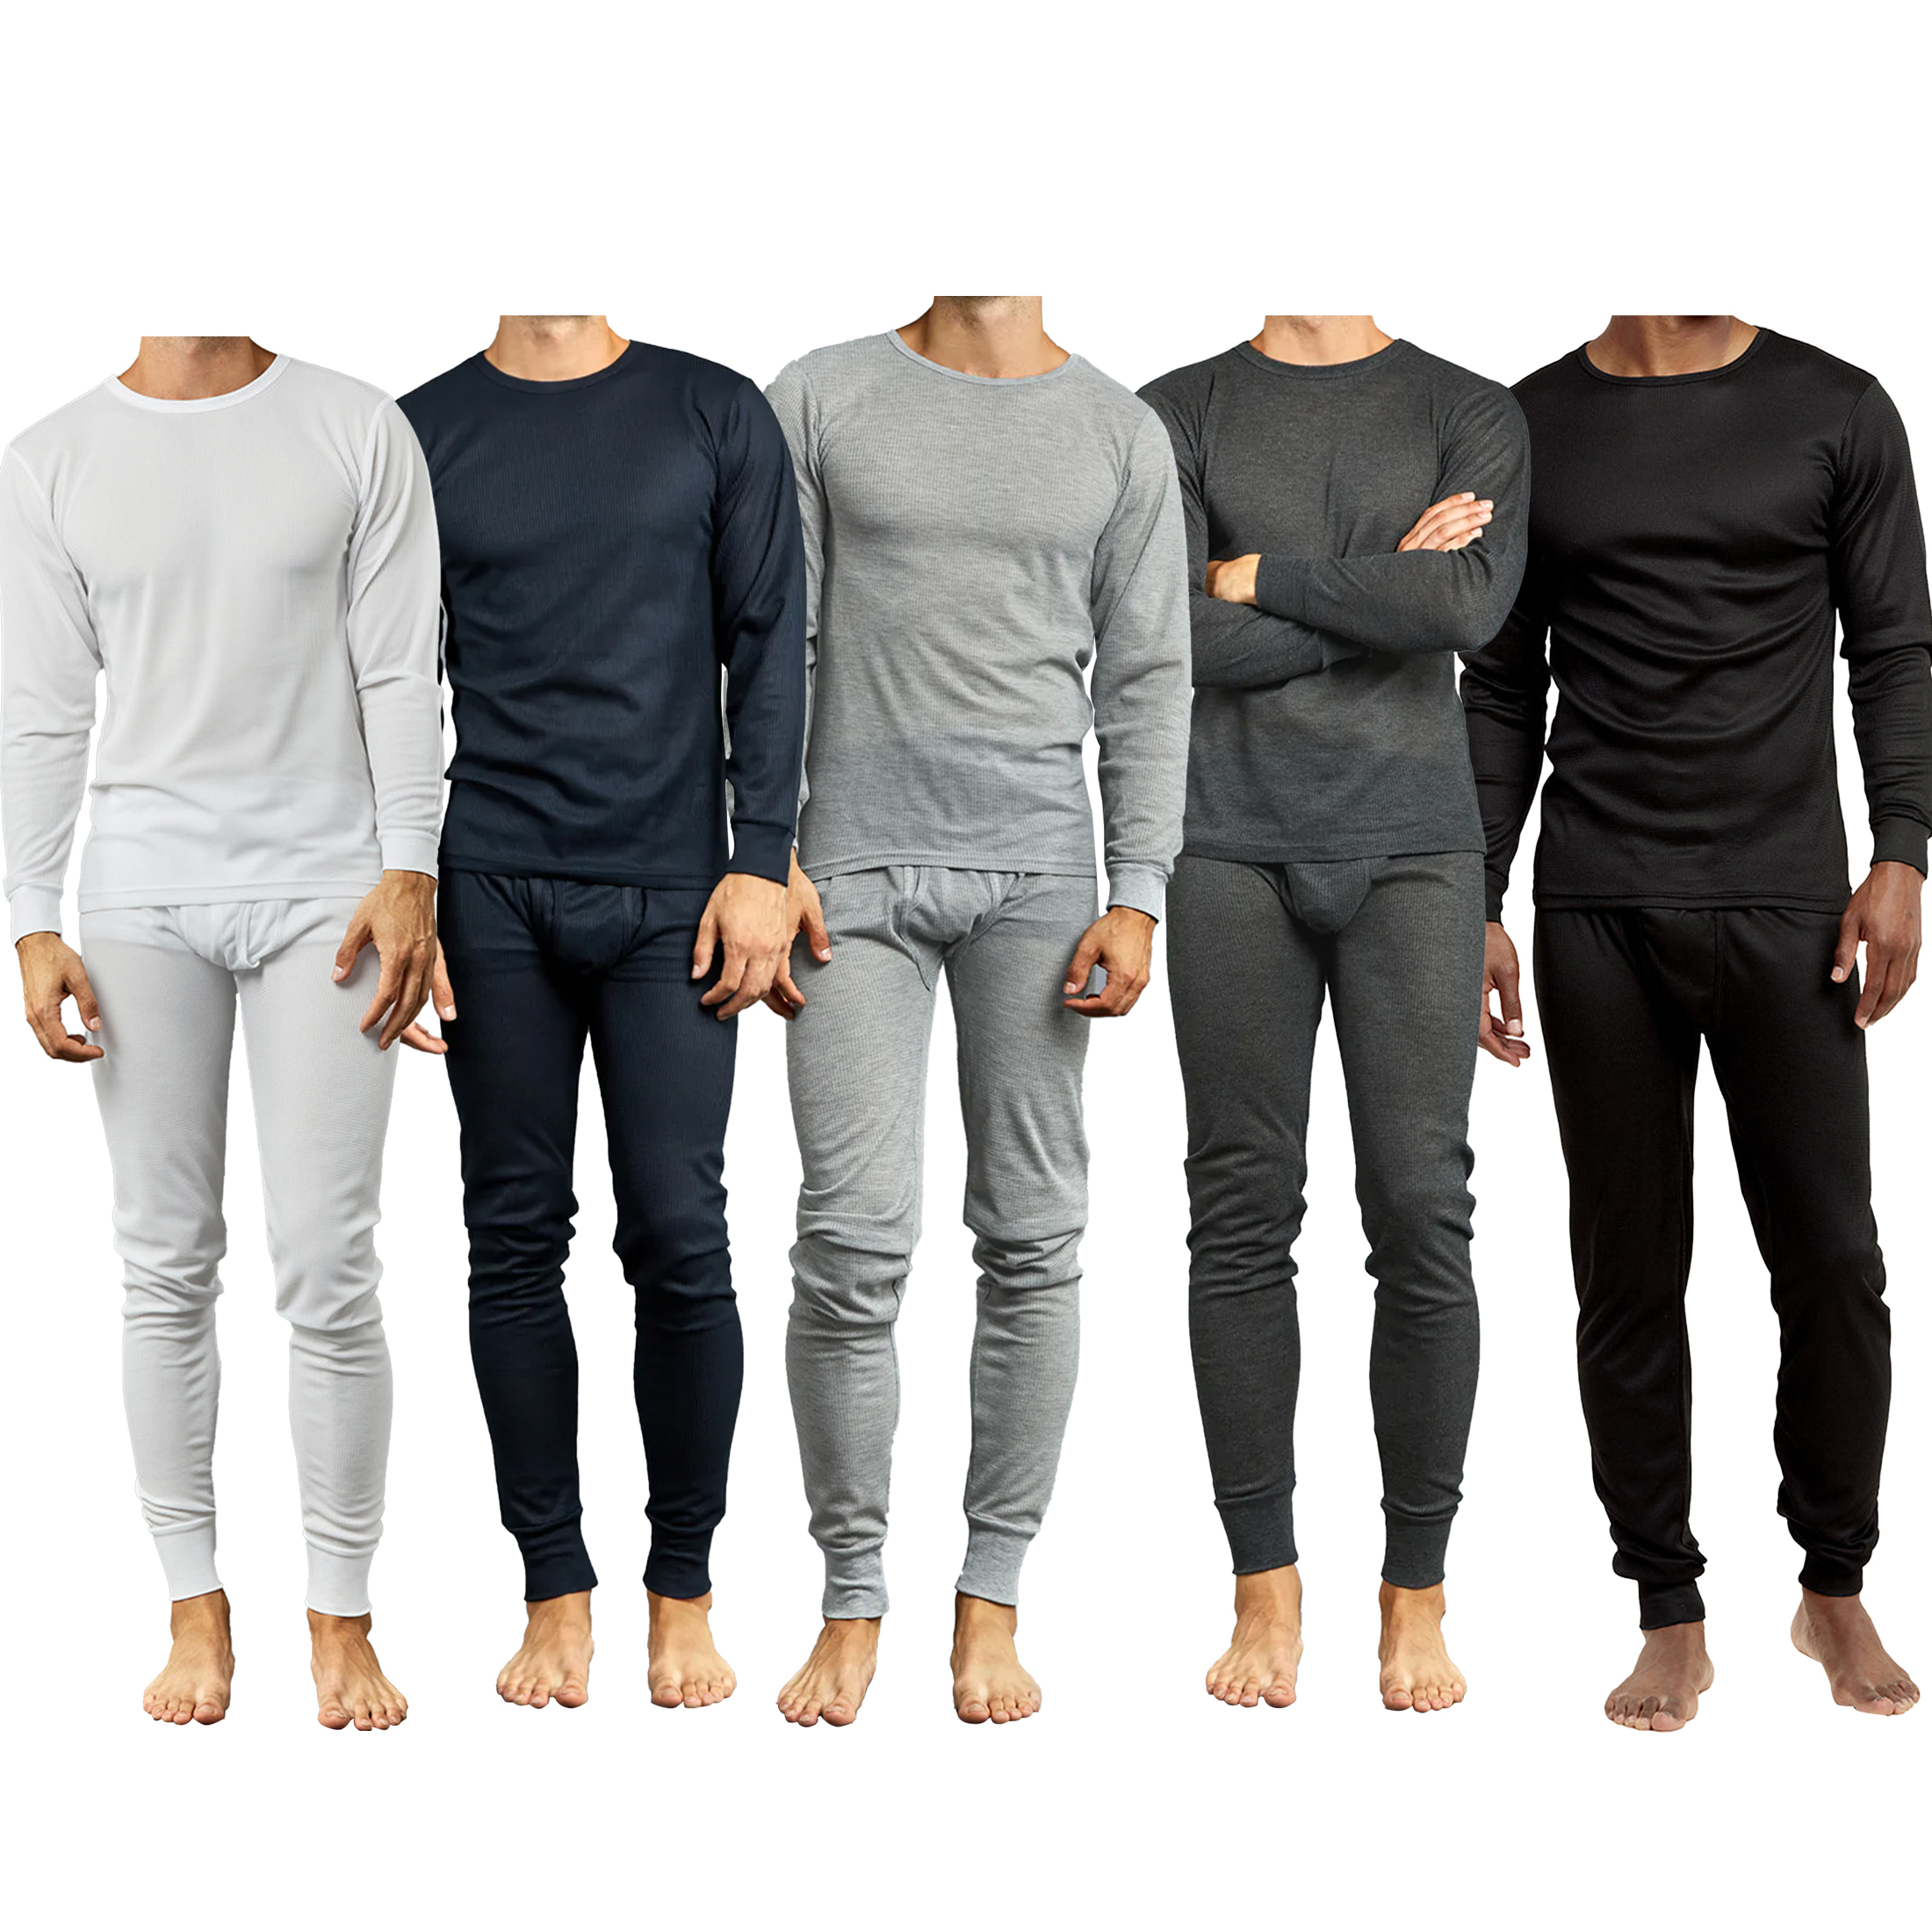 2-Piece: Men's Moisture Wicking Long Johns Base Layer Thermal Underwear Set (Top & Bottom) - Black, 2X-Large